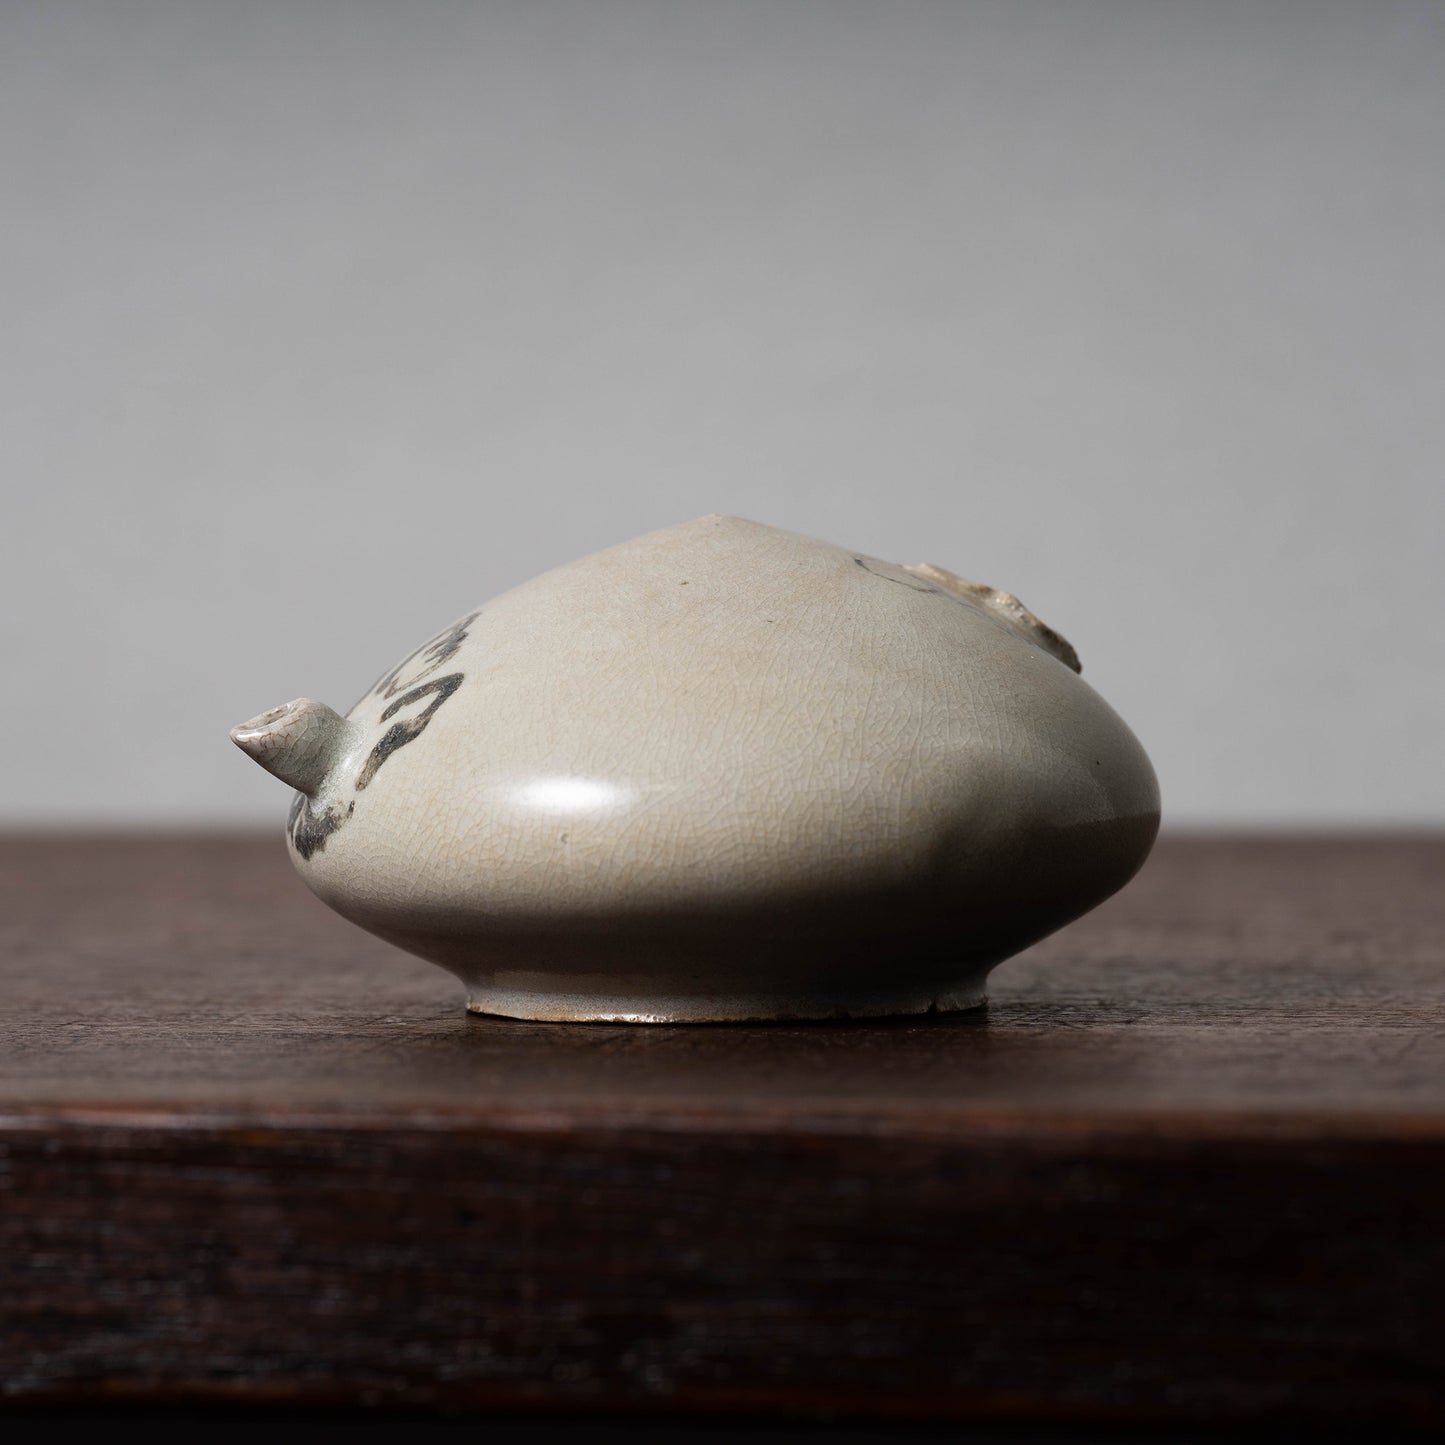 Joseon Dynasty White Porcelain Water Dropper with Flower Design in Underglaze Iron